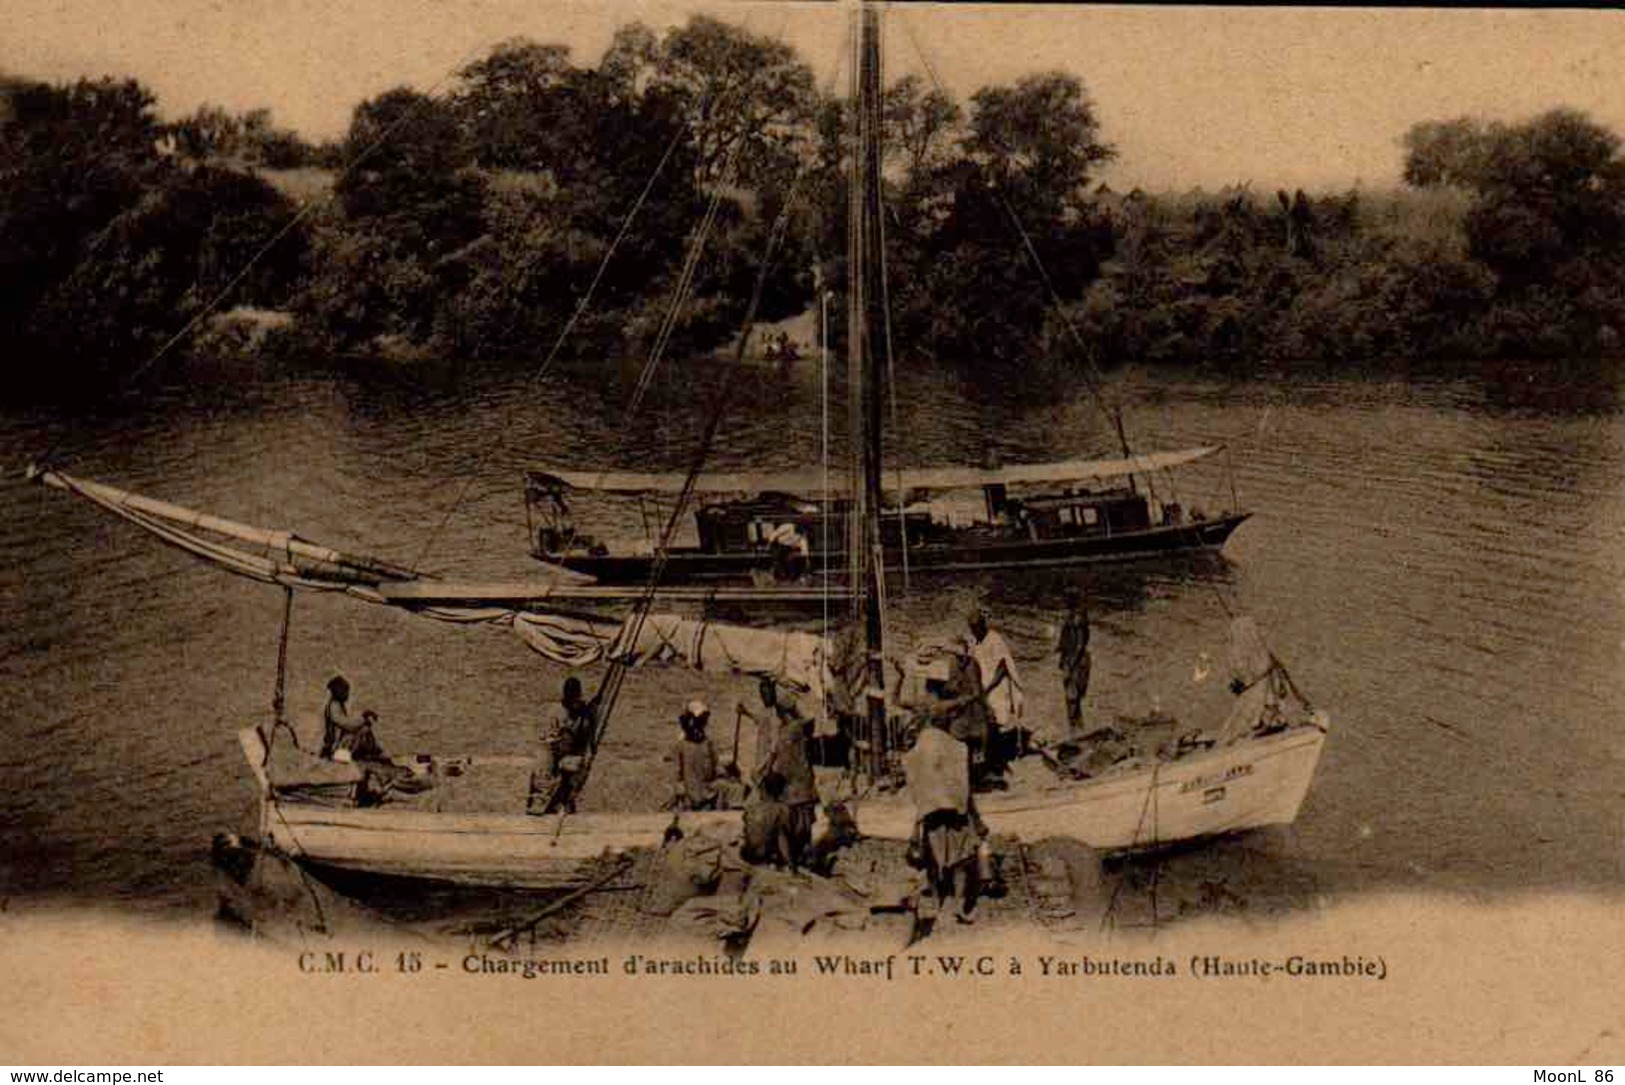 GAMBIE - Ancienne AFRIQUE OCCIDENTALE - CHARGEMENT D ARACHIDES AU WHARF T.W.C. A YARBUTENDA - Gambie